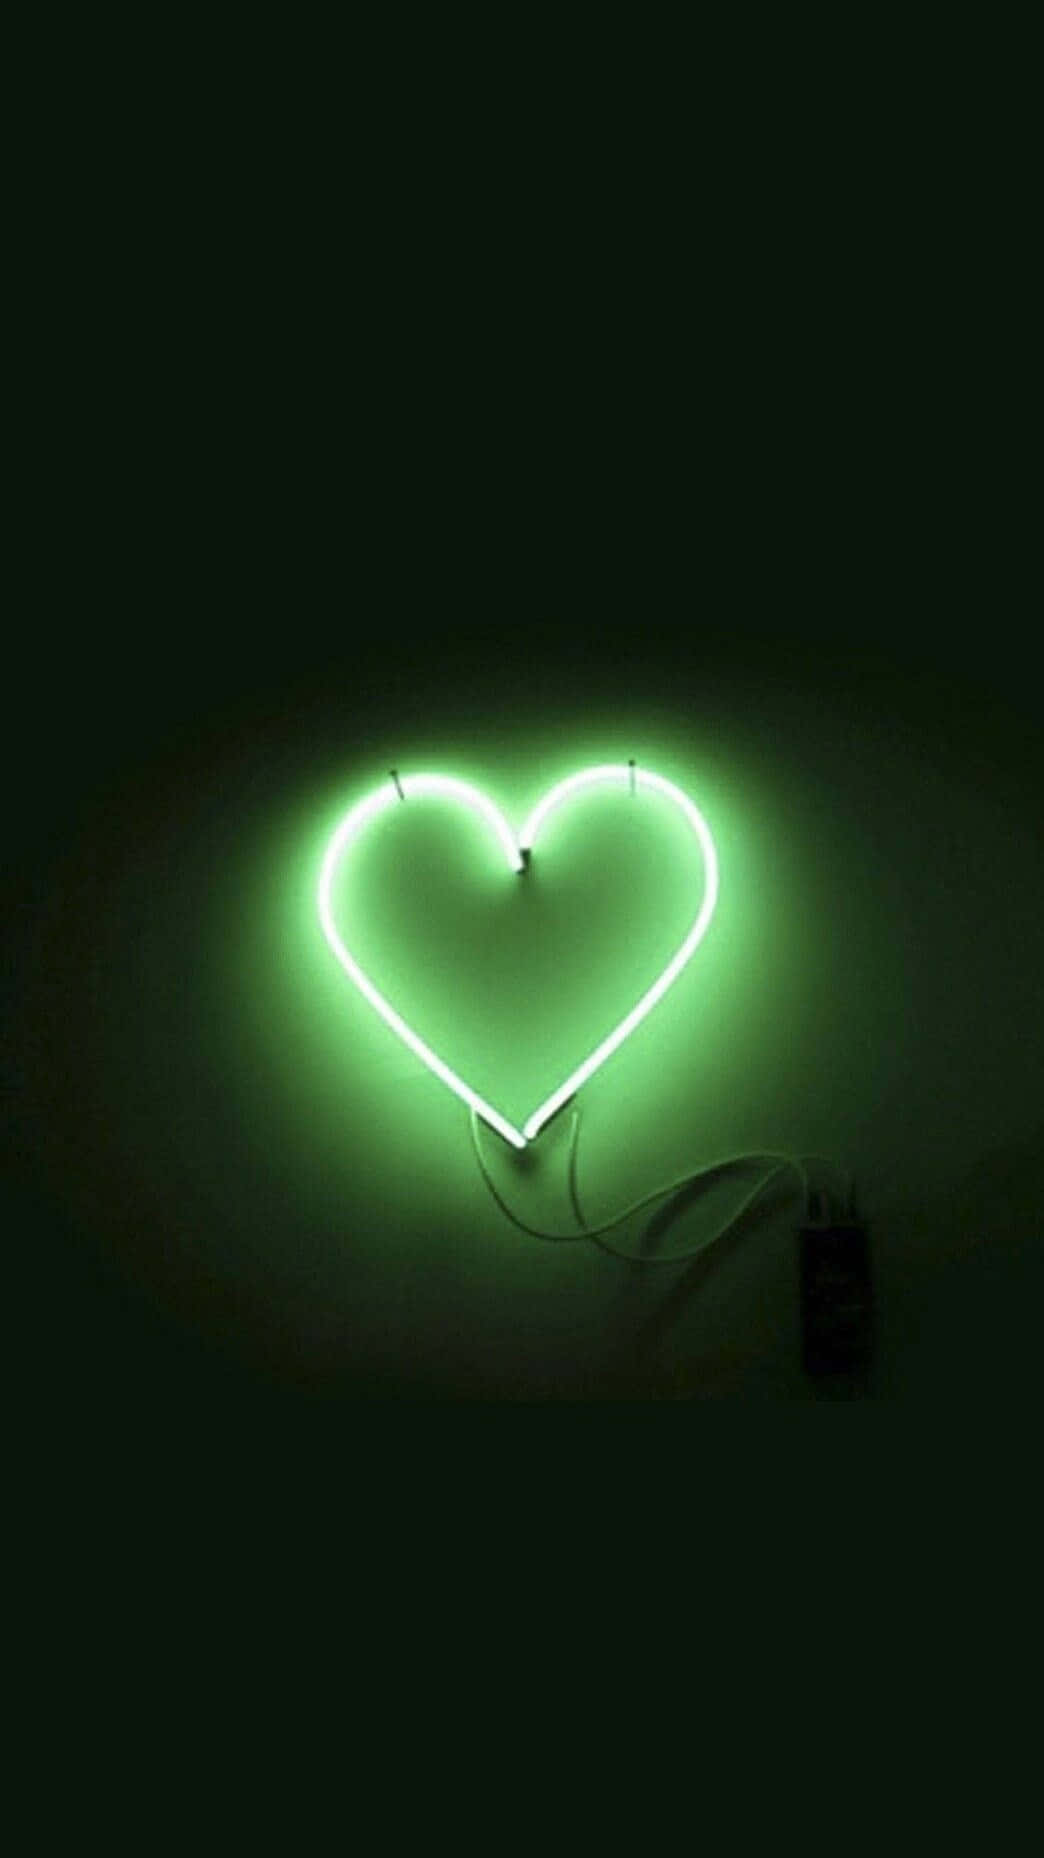 Mint Green Hearts, a Symbol of Affection Wallpaper